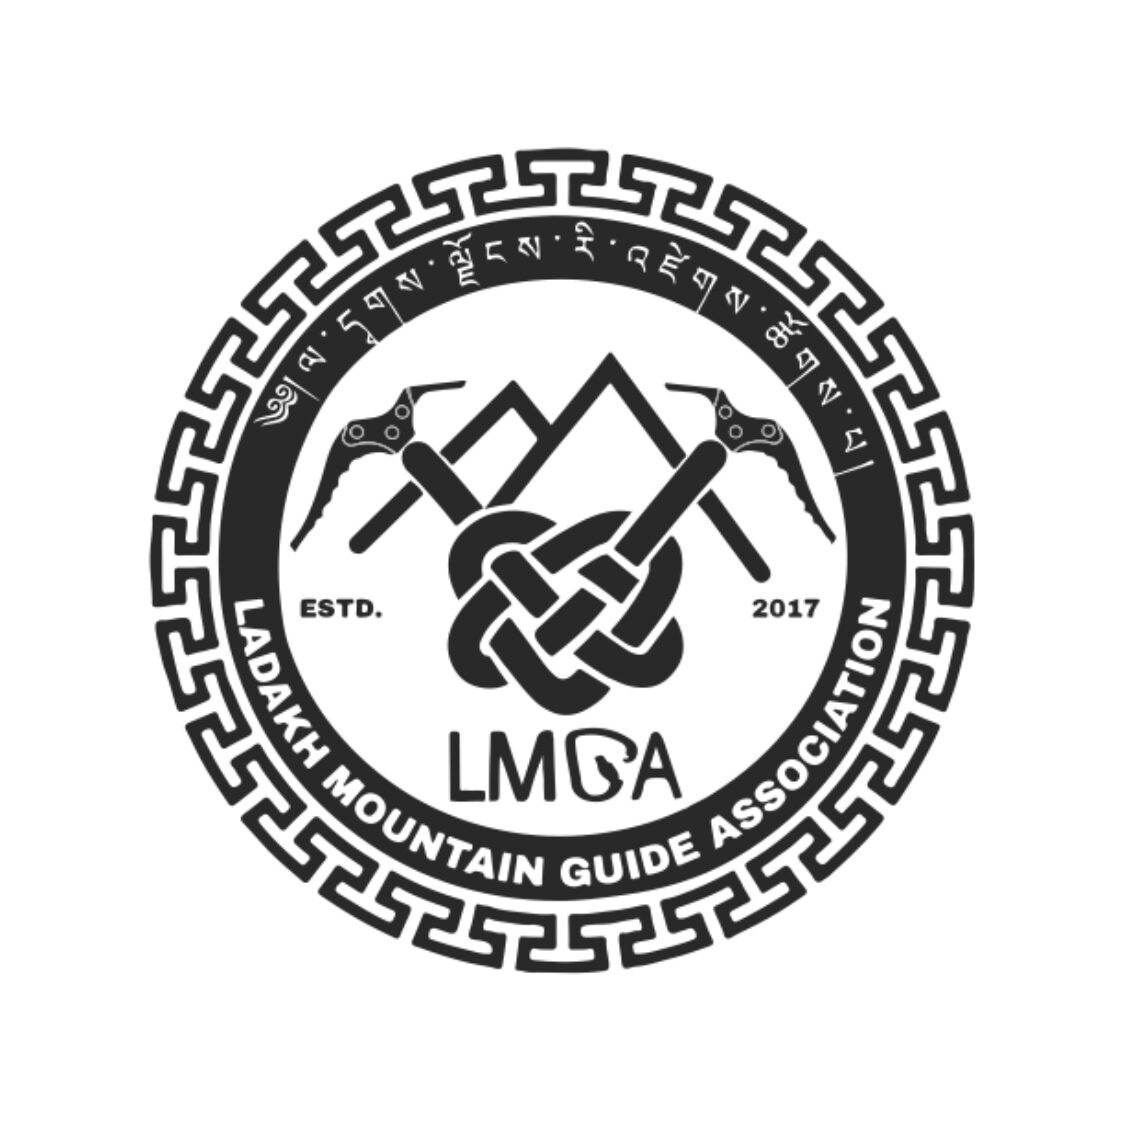 Ladakh Mountain Guides Association